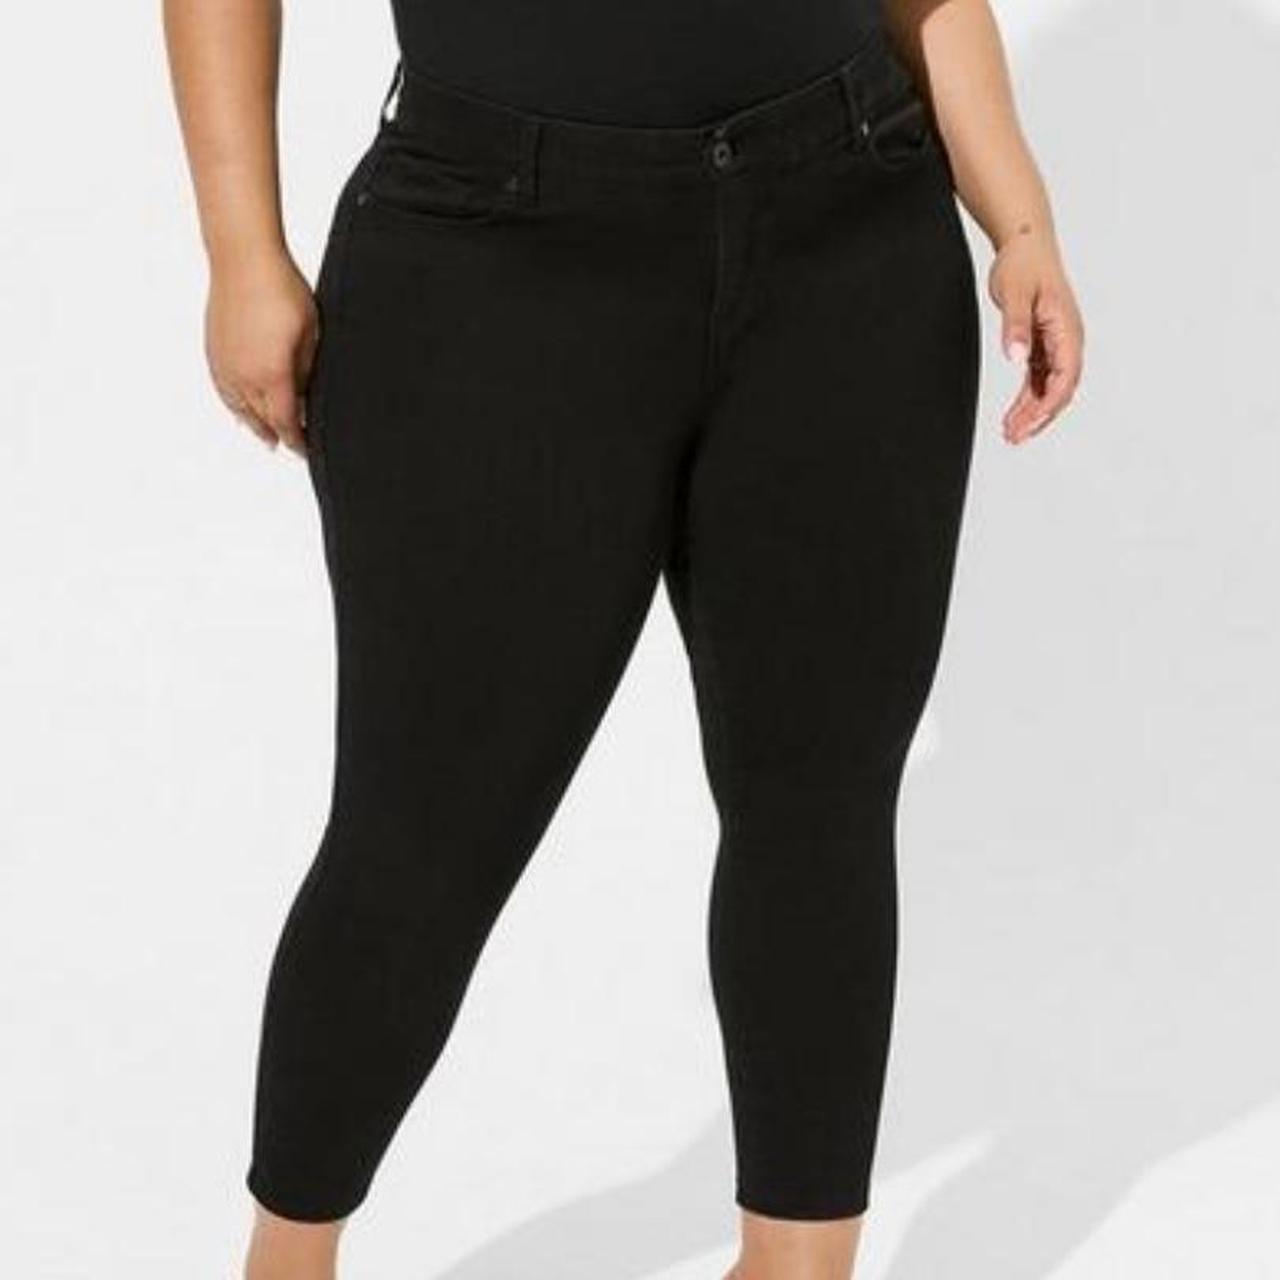 super skinny black stretchy jeans, size 16 from - Depop